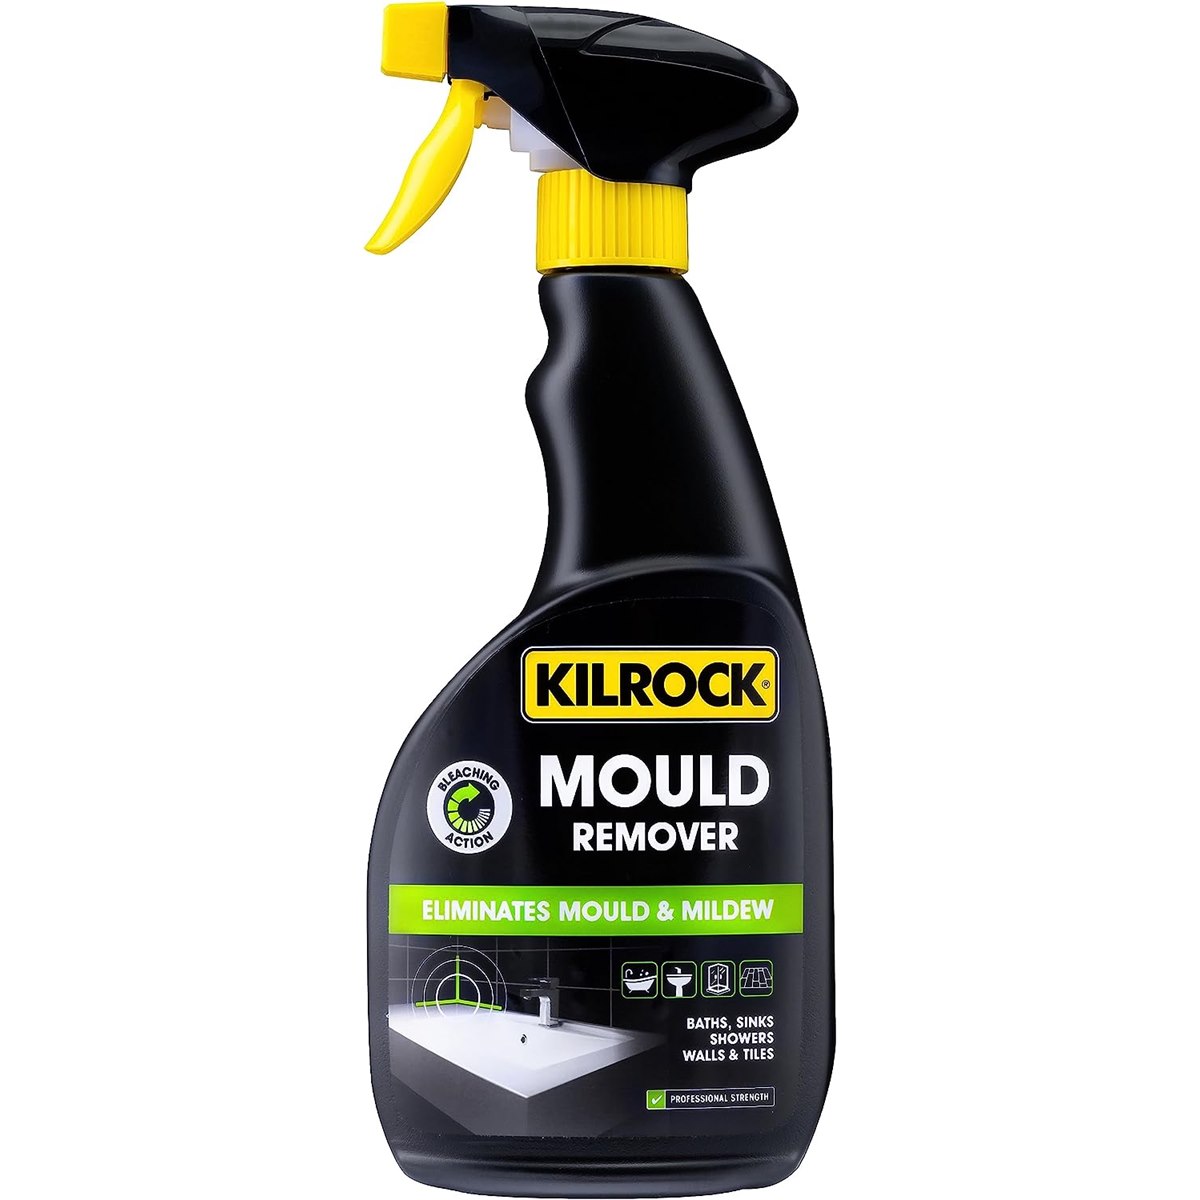 Kilrock Professional Strength Mould Remover Spray